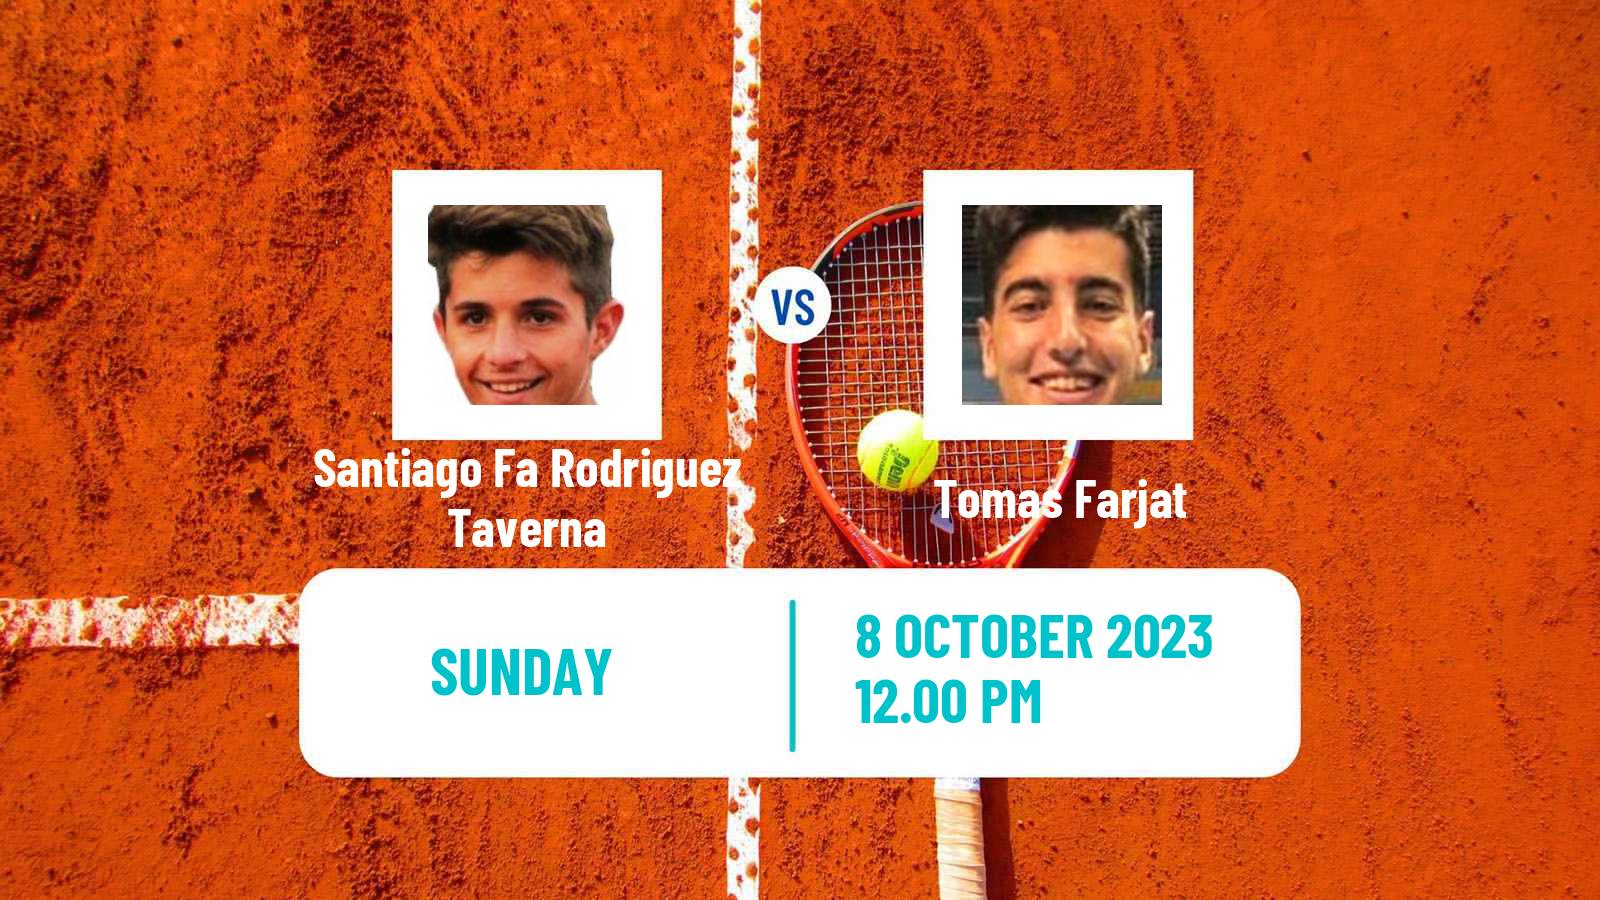 Tennis Buenos Aires 2 Challenger Men Santiago Fa Rodriguez Taverna - Tomas Farjat